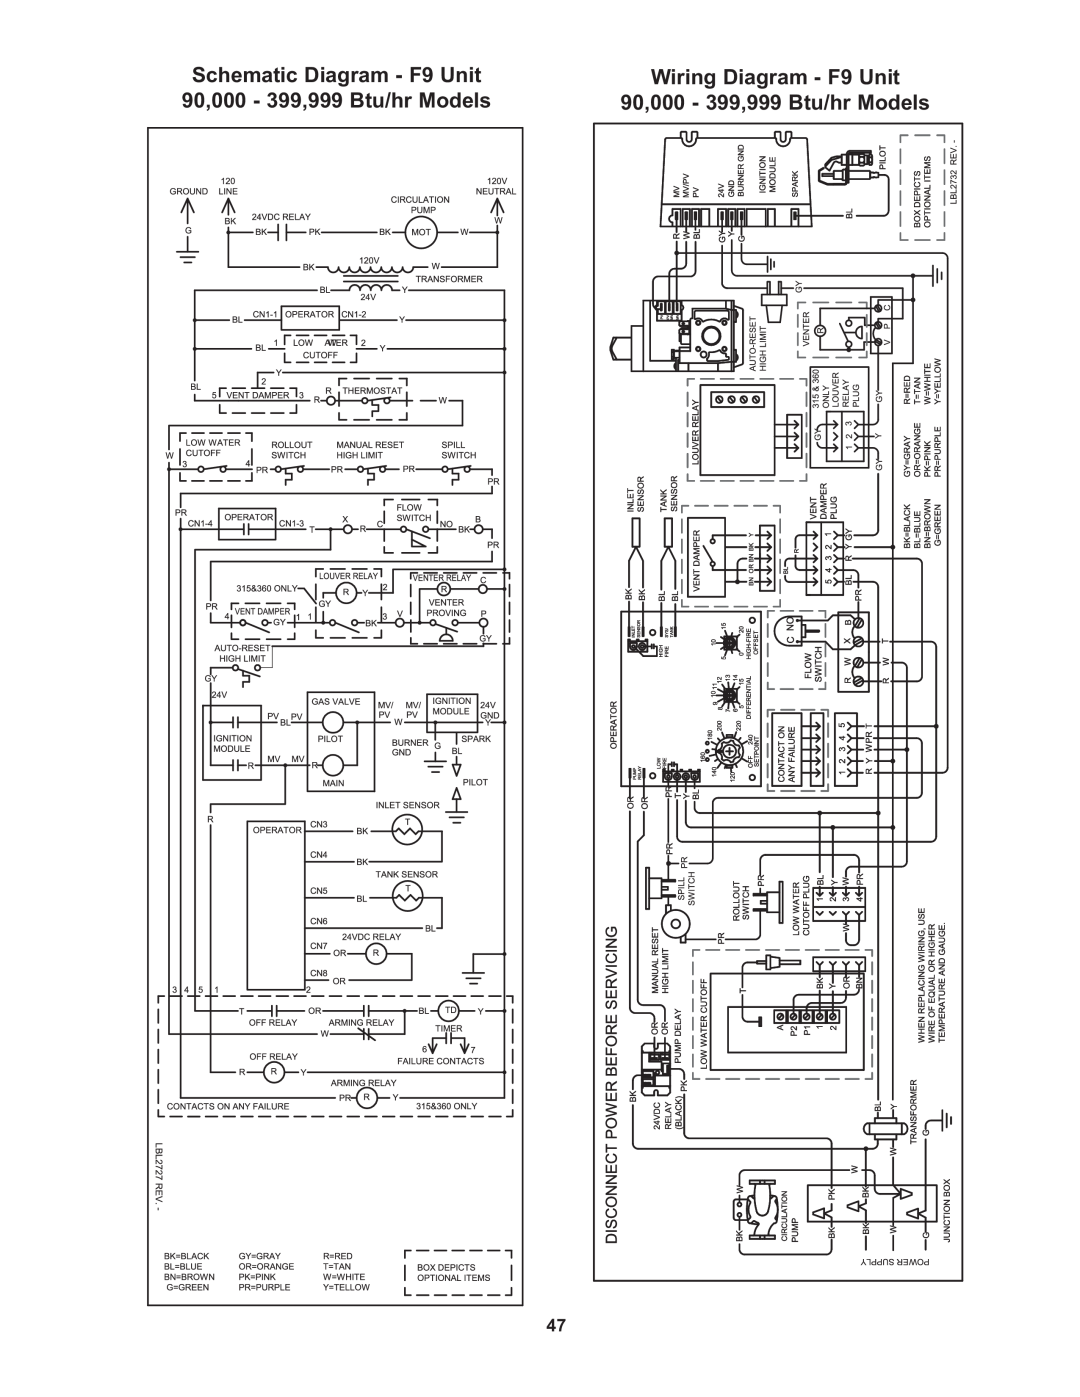 Lochinvar RSB-i&s-05, CP-5M-4/08, 45 Schematic Diagram - F9 Unit, 90,000 - 399,999 Btu/hr Models, Wiring Diagram - F9 Unit 